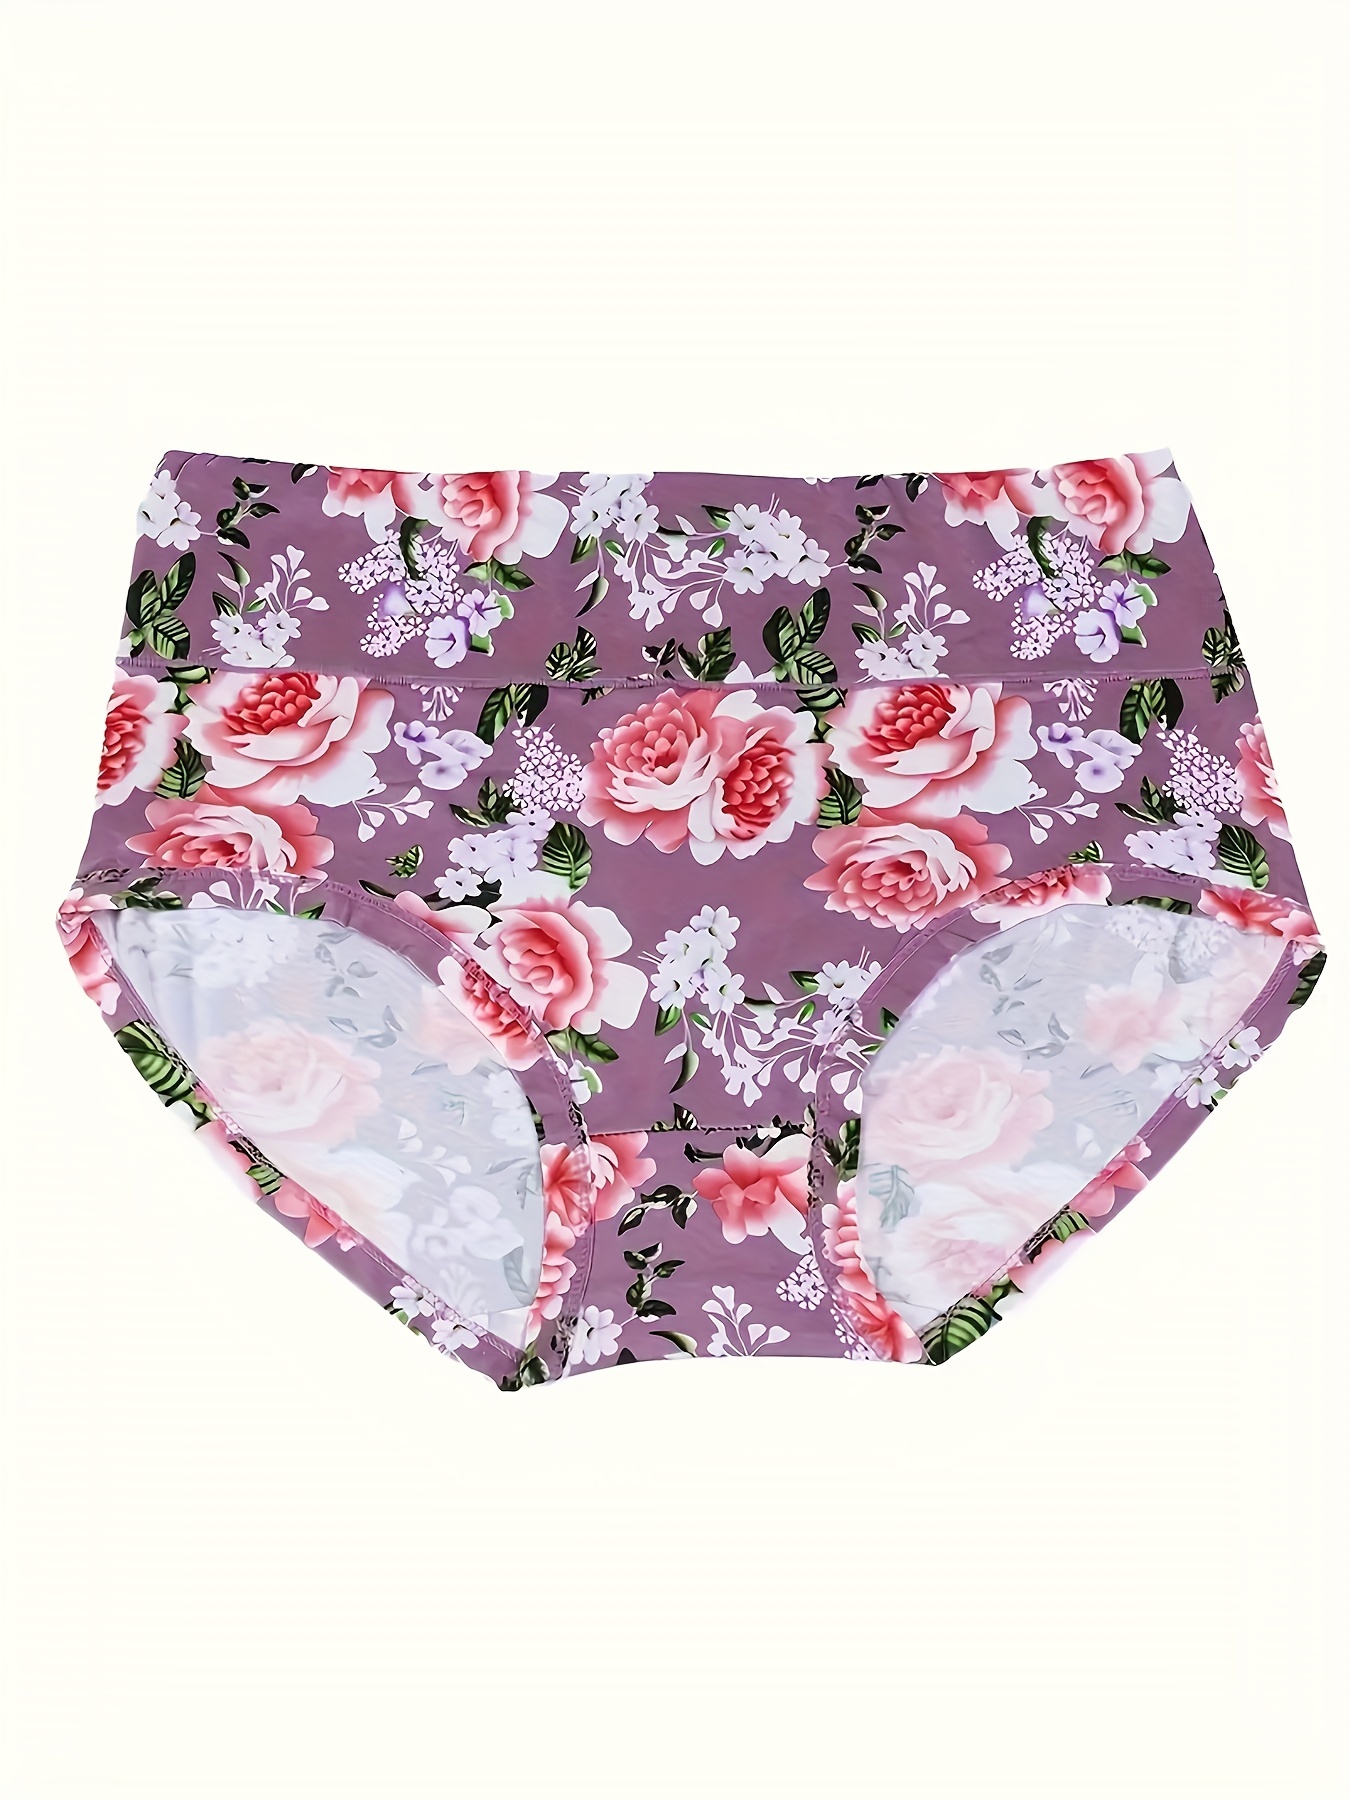 5pack Womens Cotton Panties Lingerie Underwear - Pink Plaid